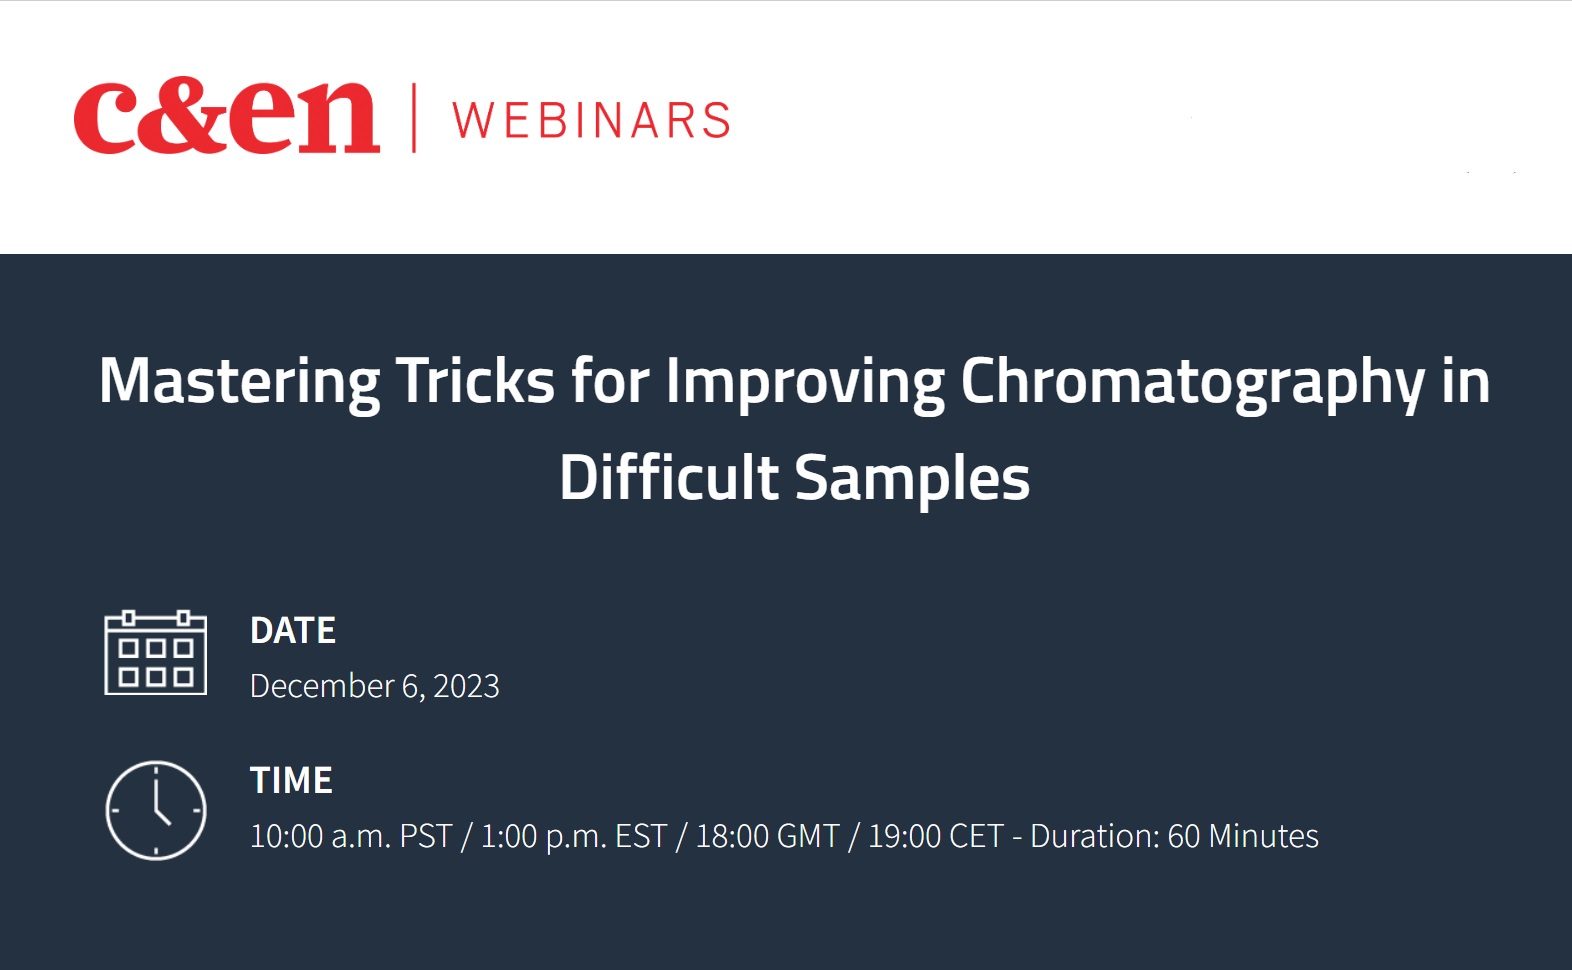 C&EN - Mastering Tricks for Improving Chromatography in Difficult Samples